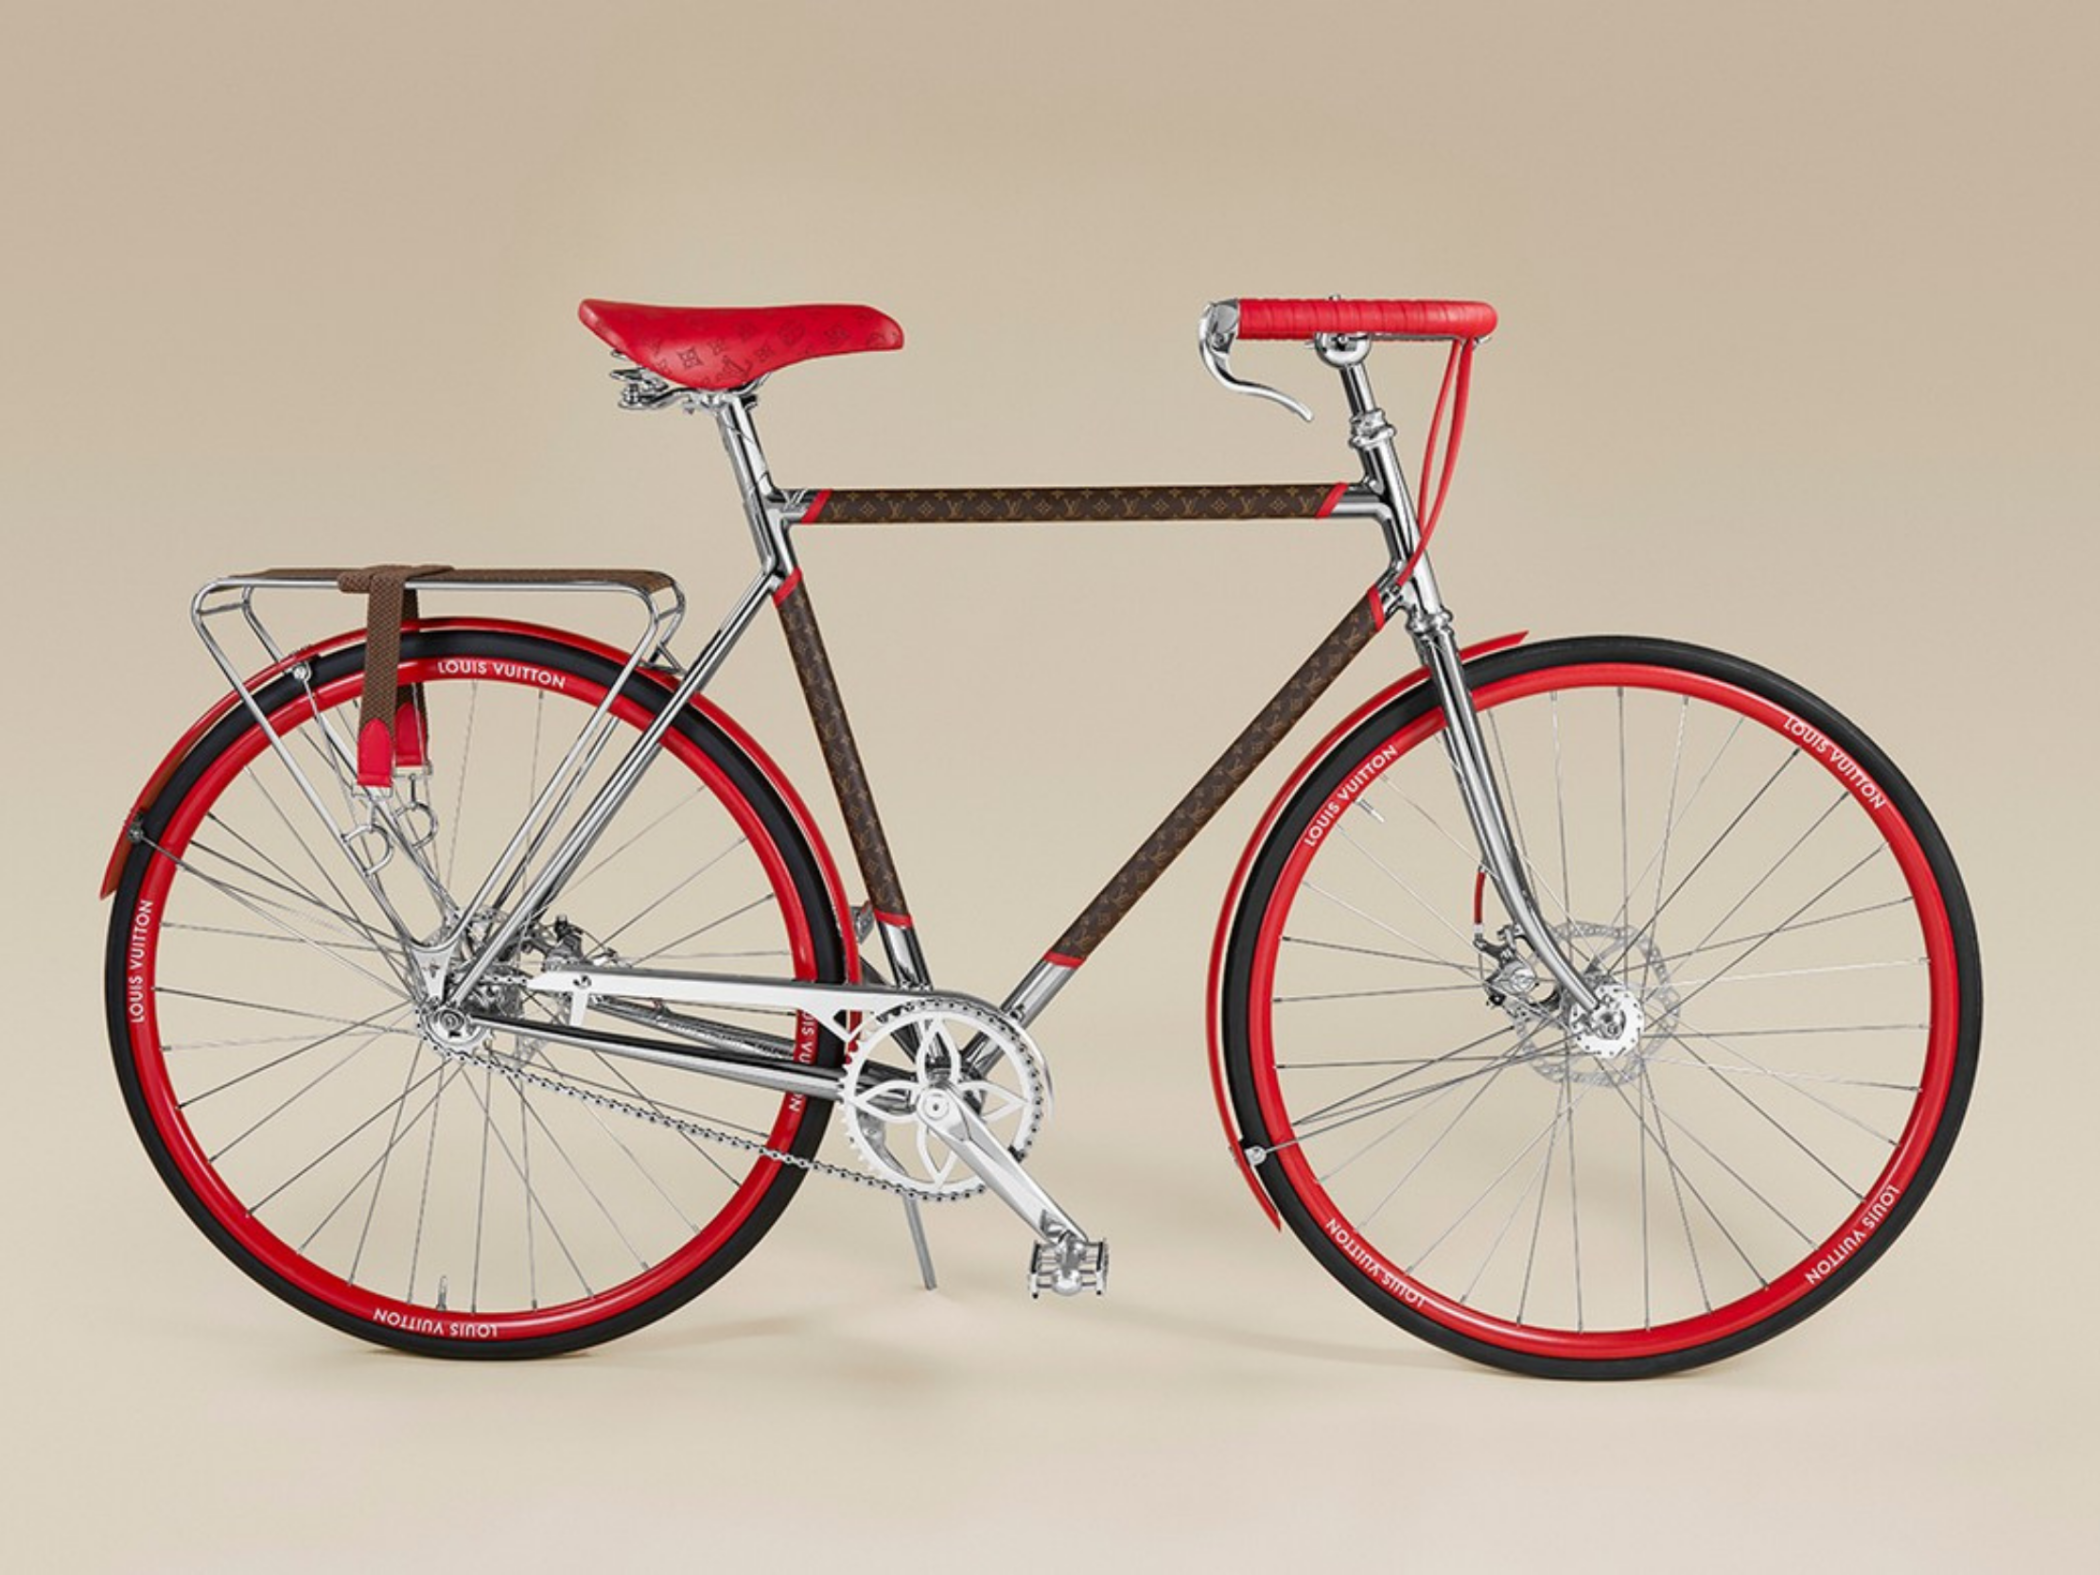 BrandConnection] The new Louis Vuitton x Maison Tamboite bike is